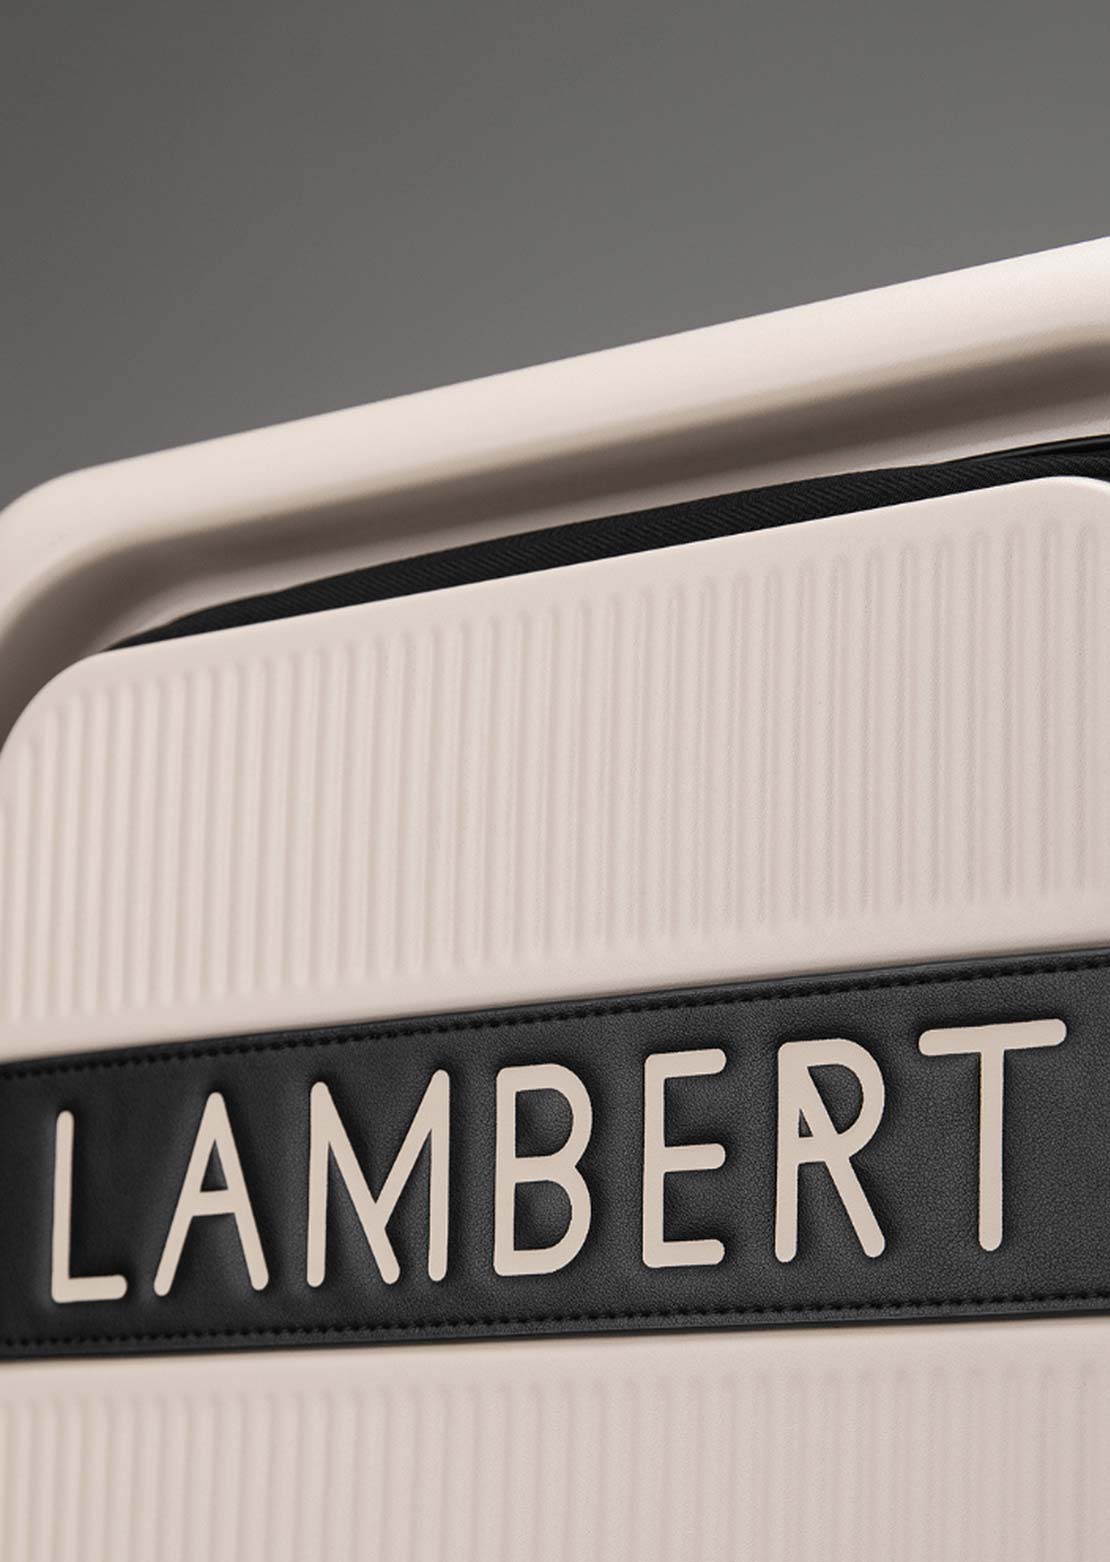 Lambert Women&#39;s Bali Cabin Suitcase Oystermix Polycarbonate